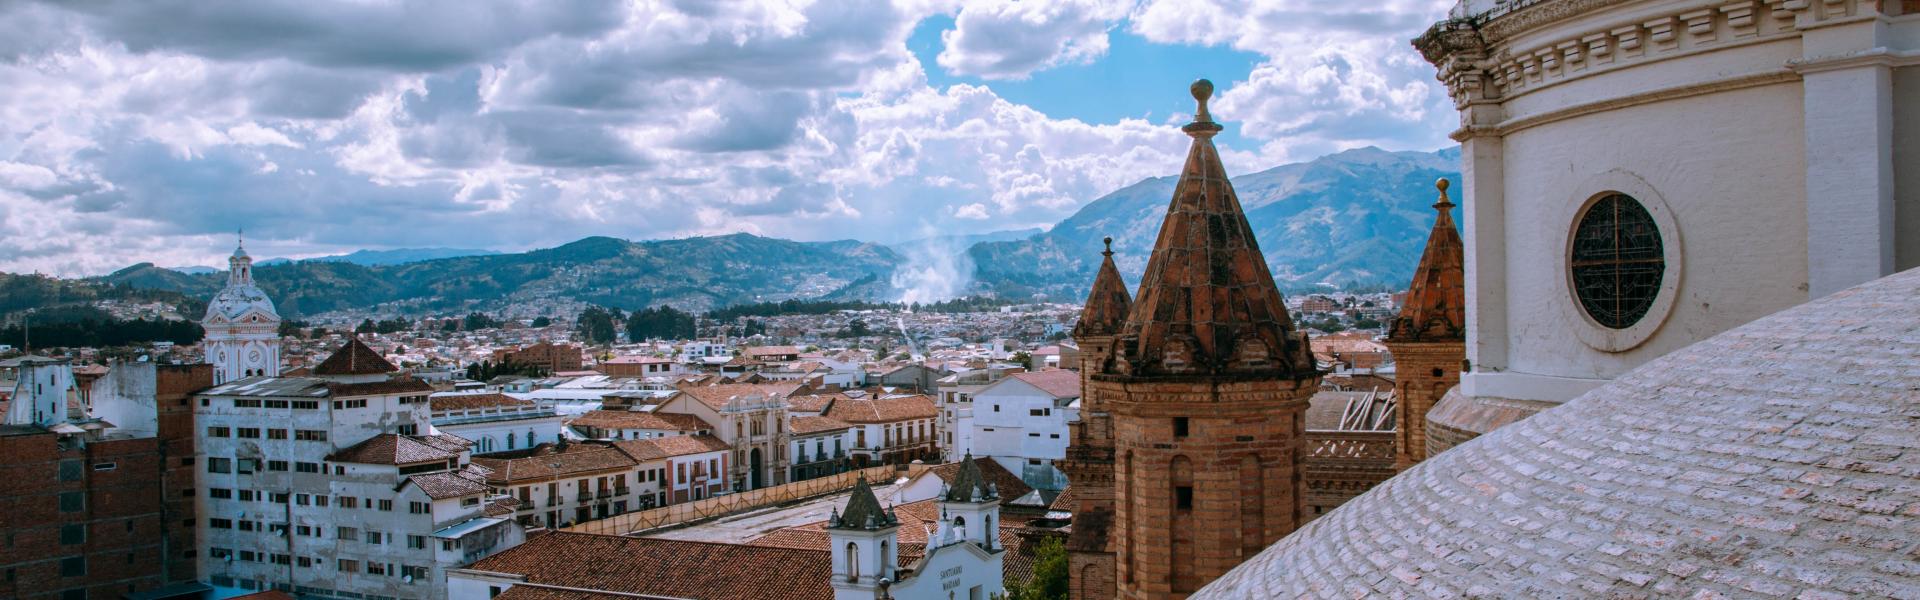 Cuenca Scenic View